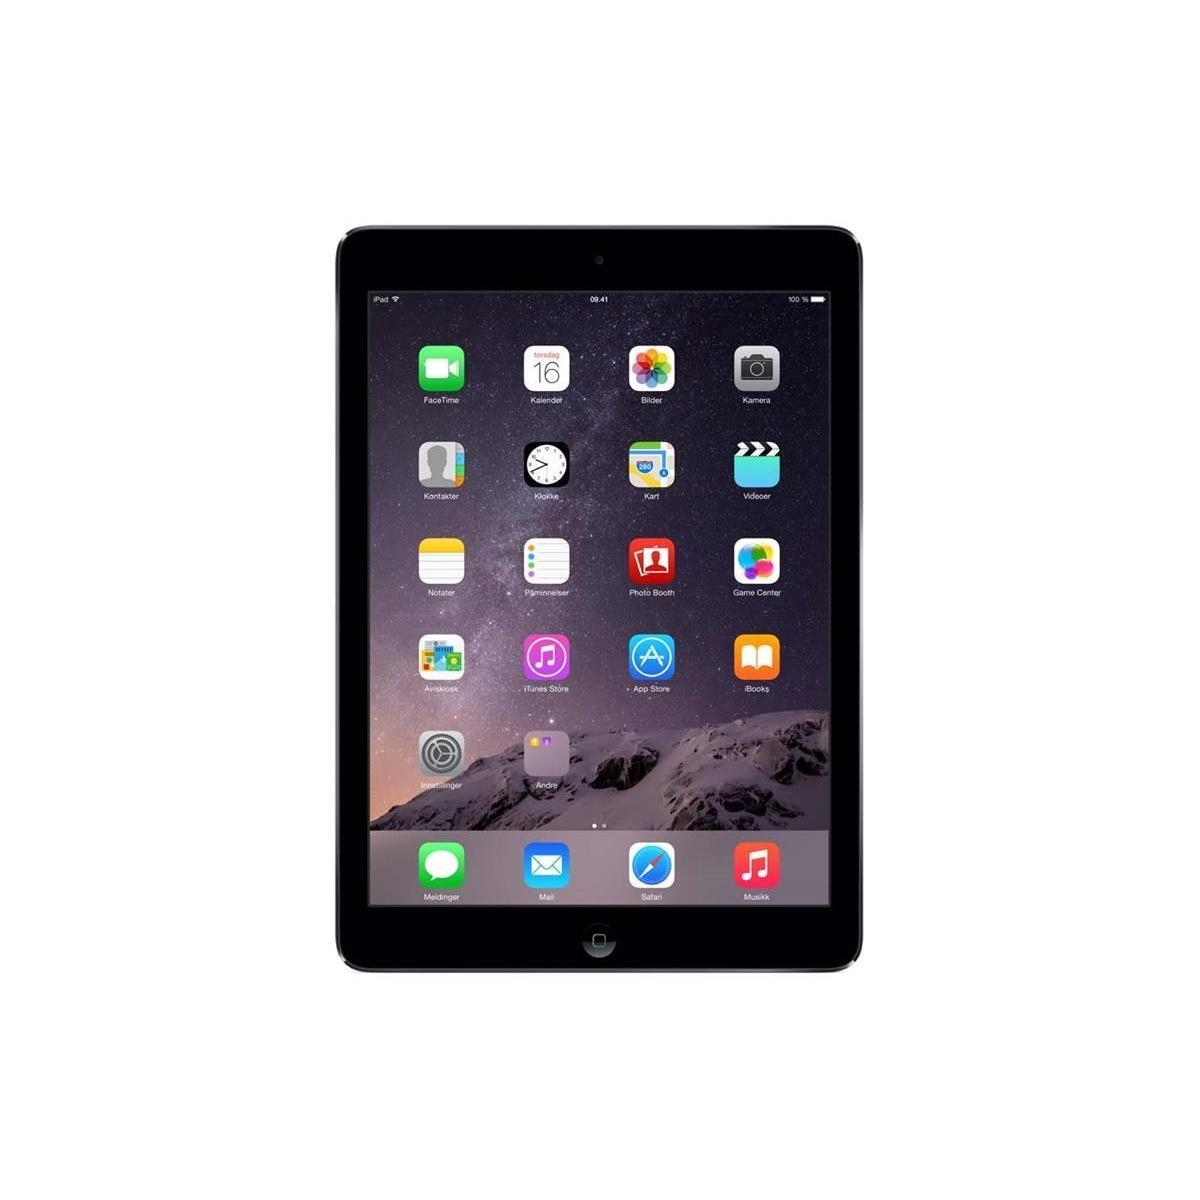 iPad Air (2013) - WiFi - Reacondicionado